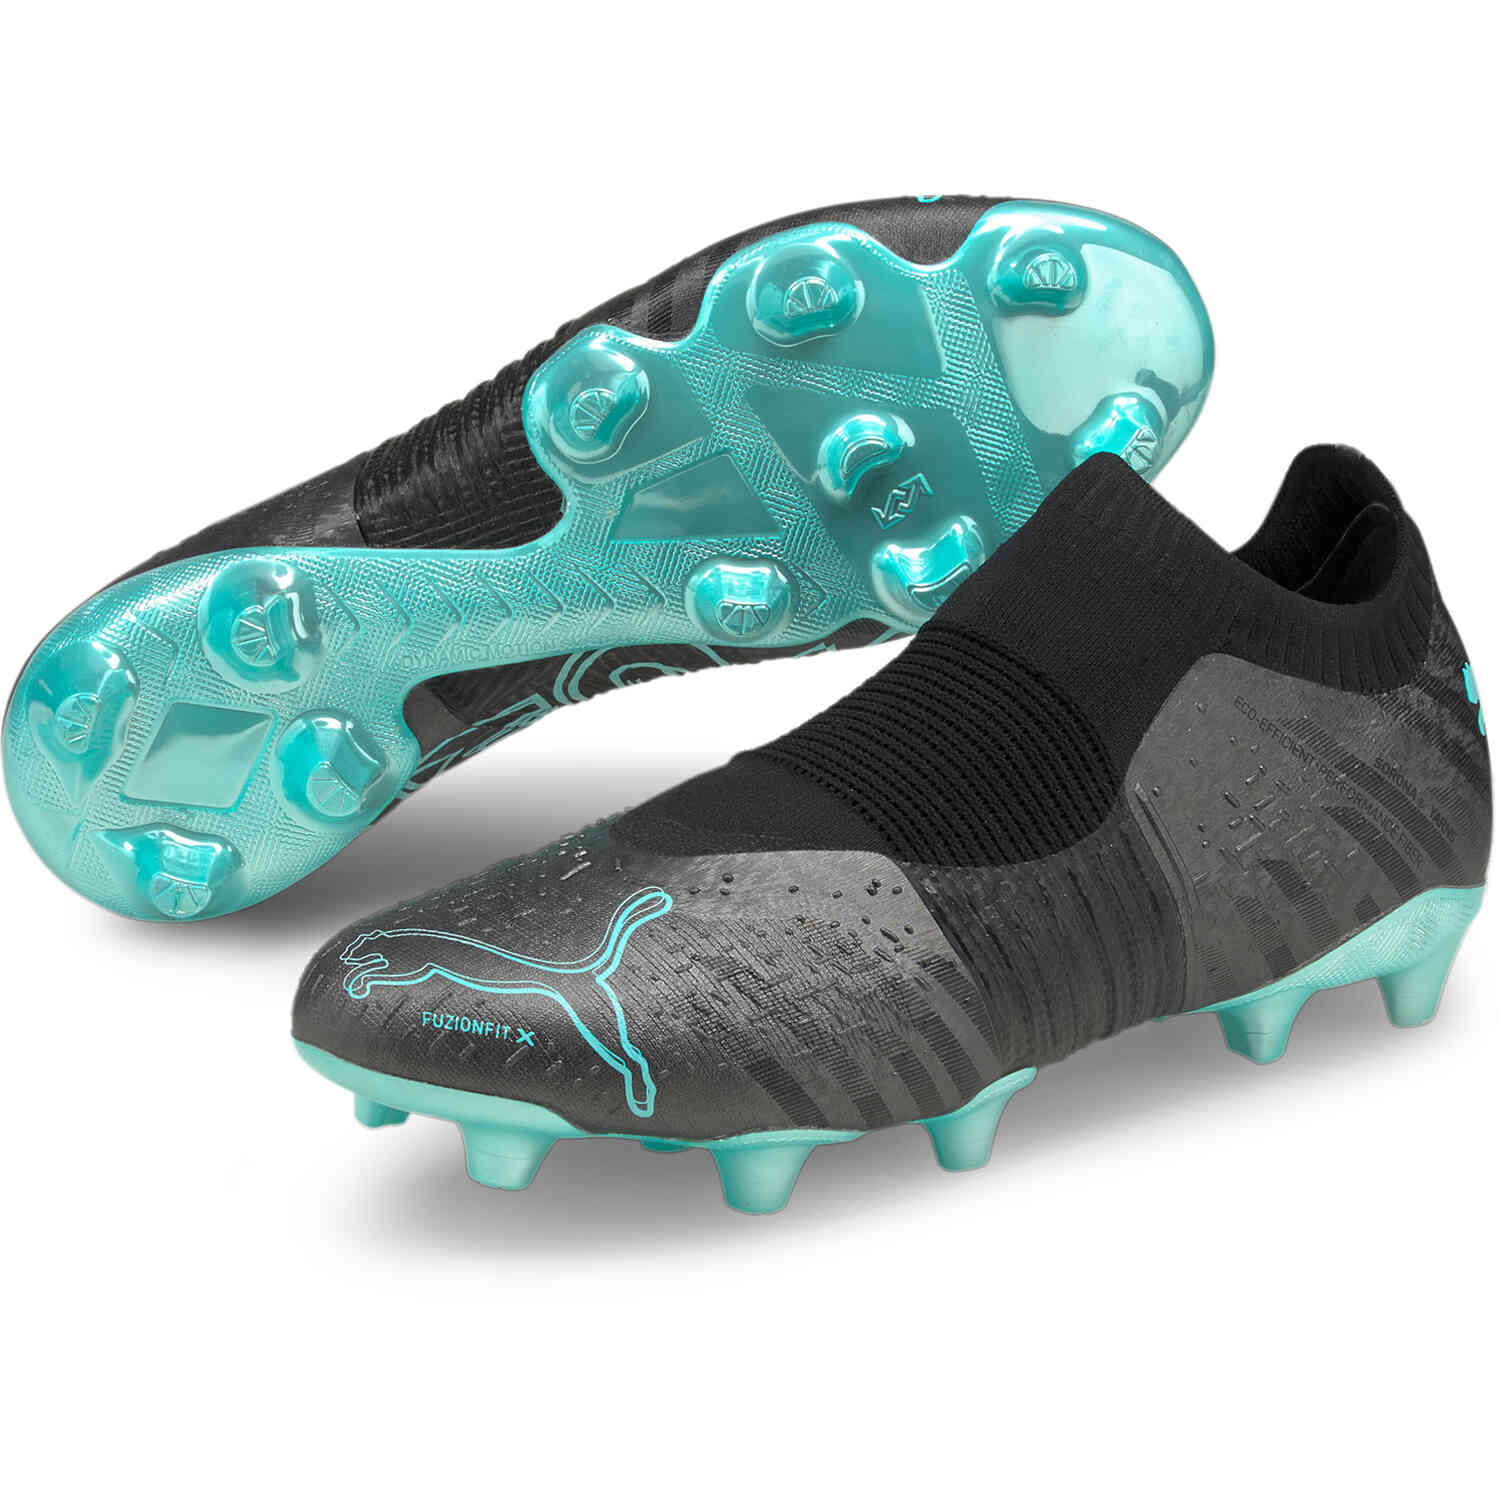 Future Z Tech 1.2 FG/AG Soccer Cleats - Elektro Aqua & Aged Silver with Black - Soccer Master